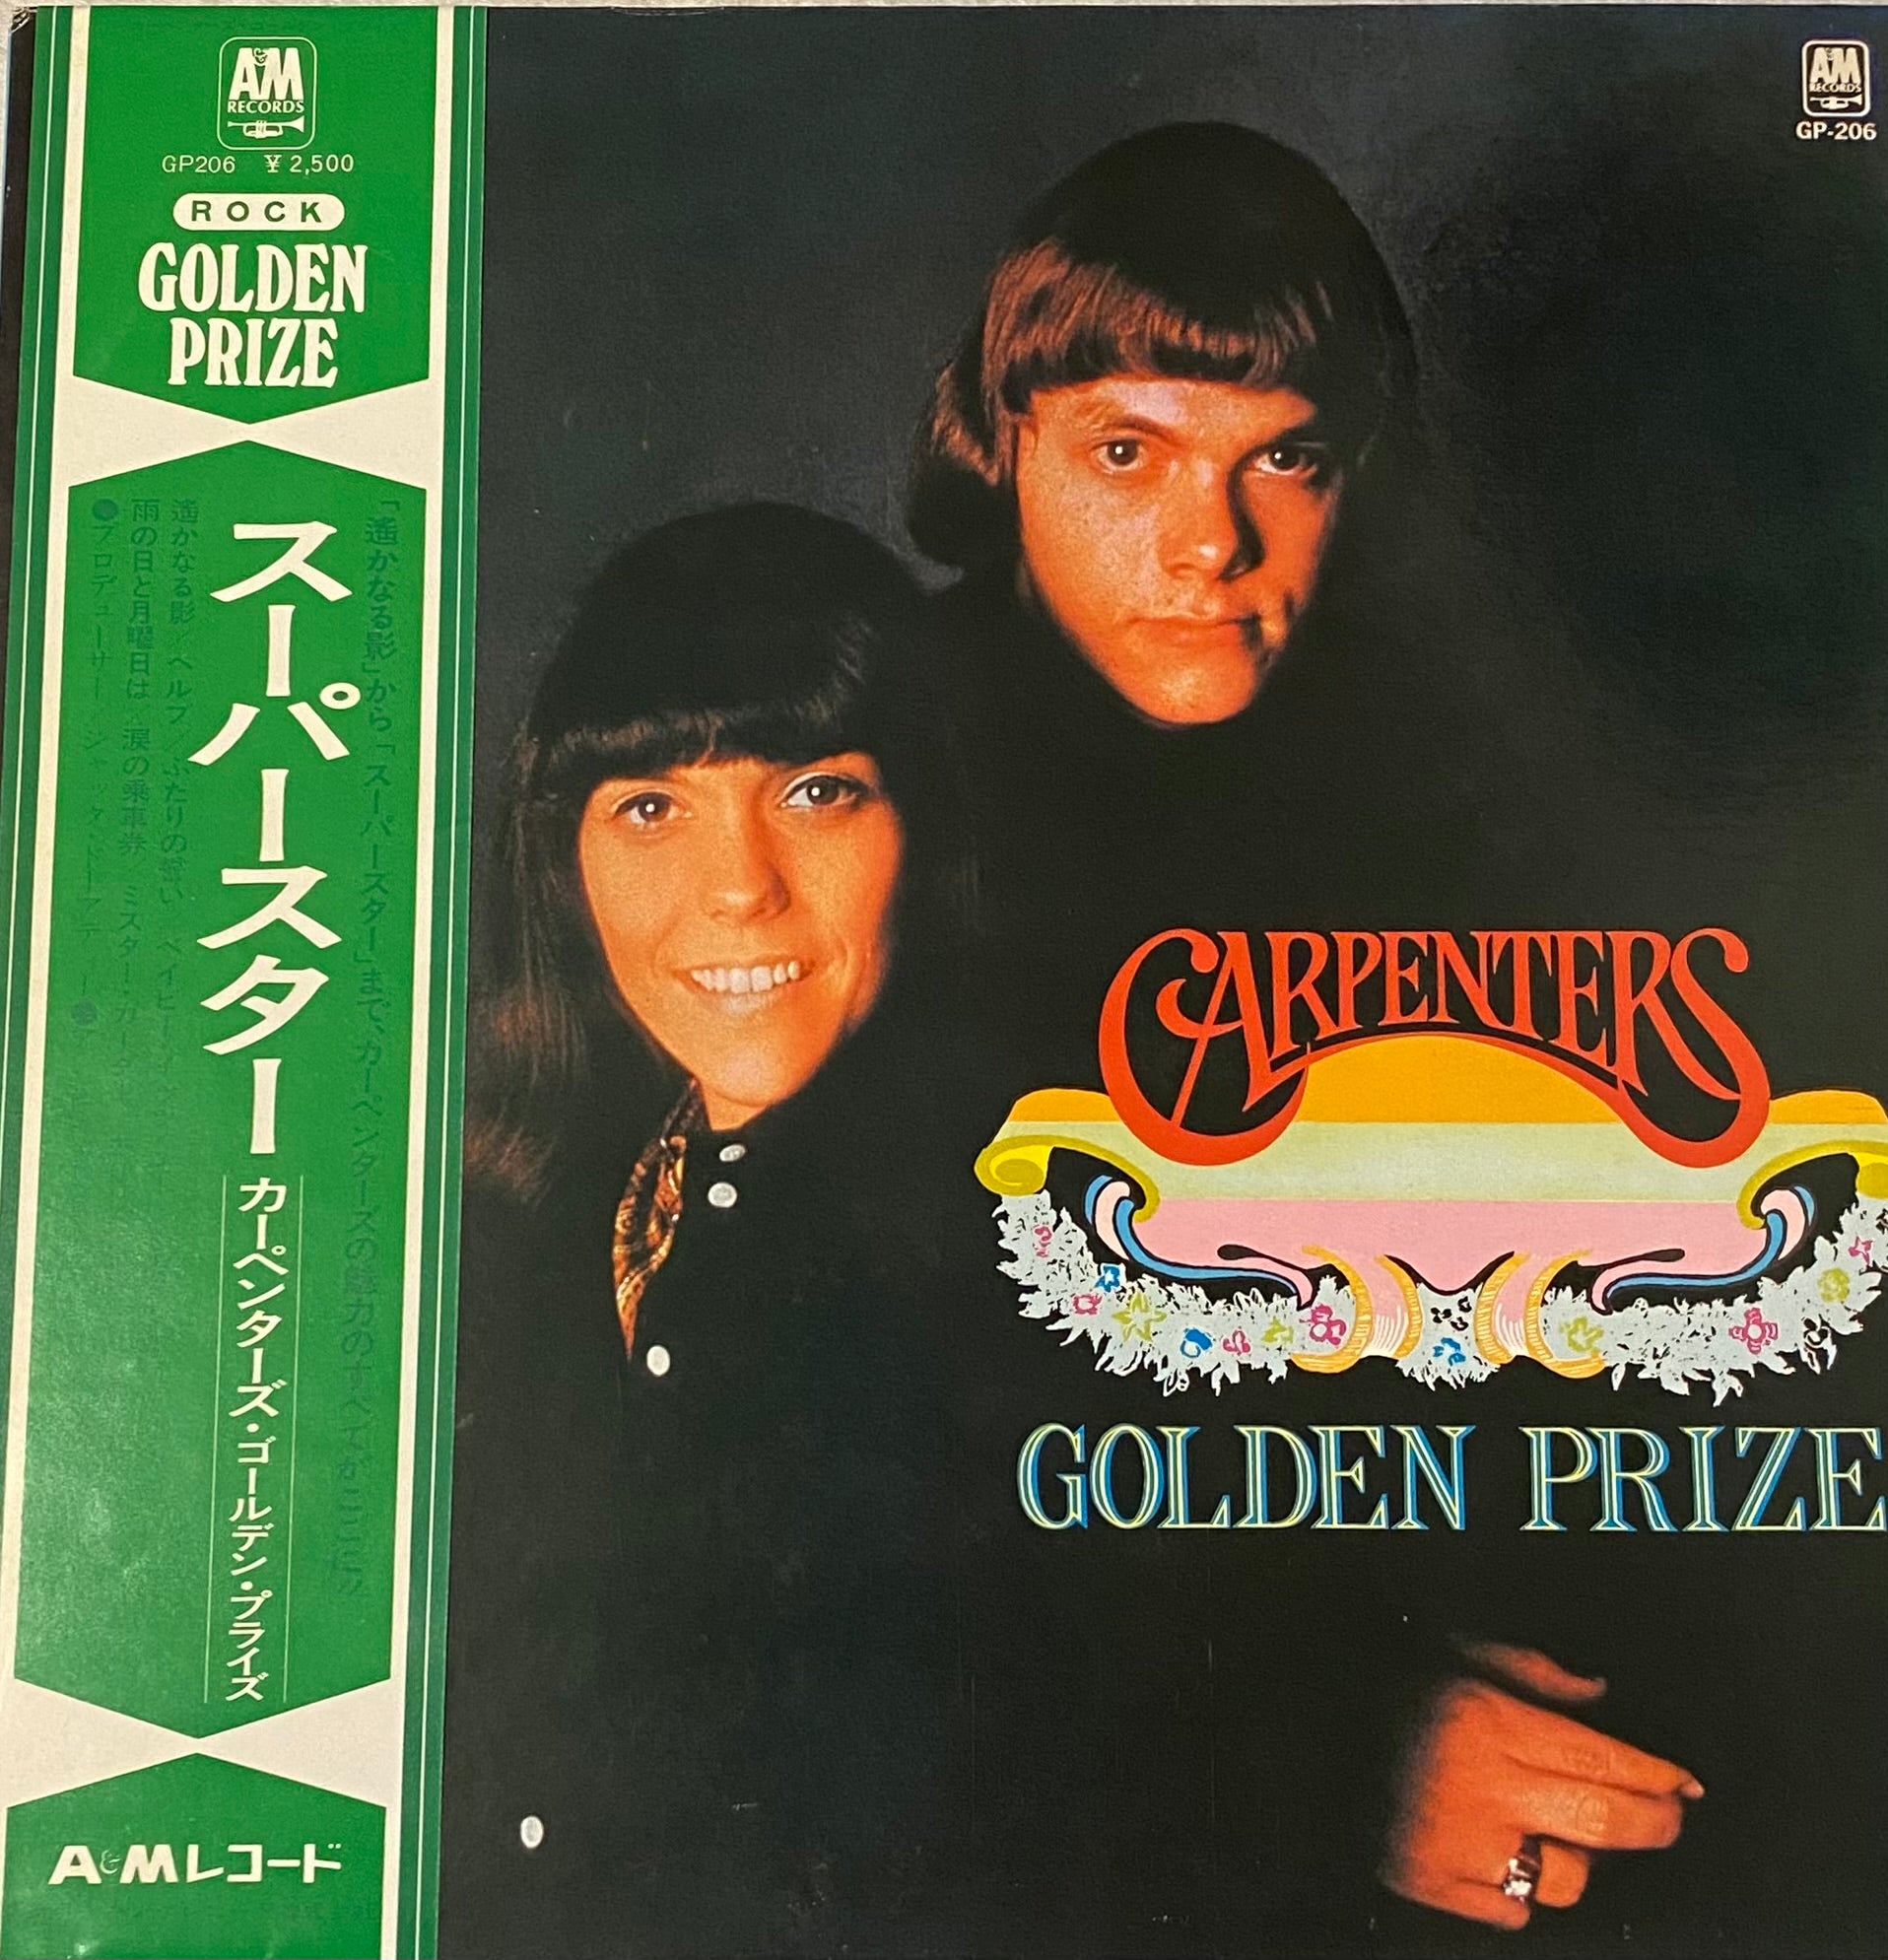 CARPENTERS - Carpenters Golden Prize